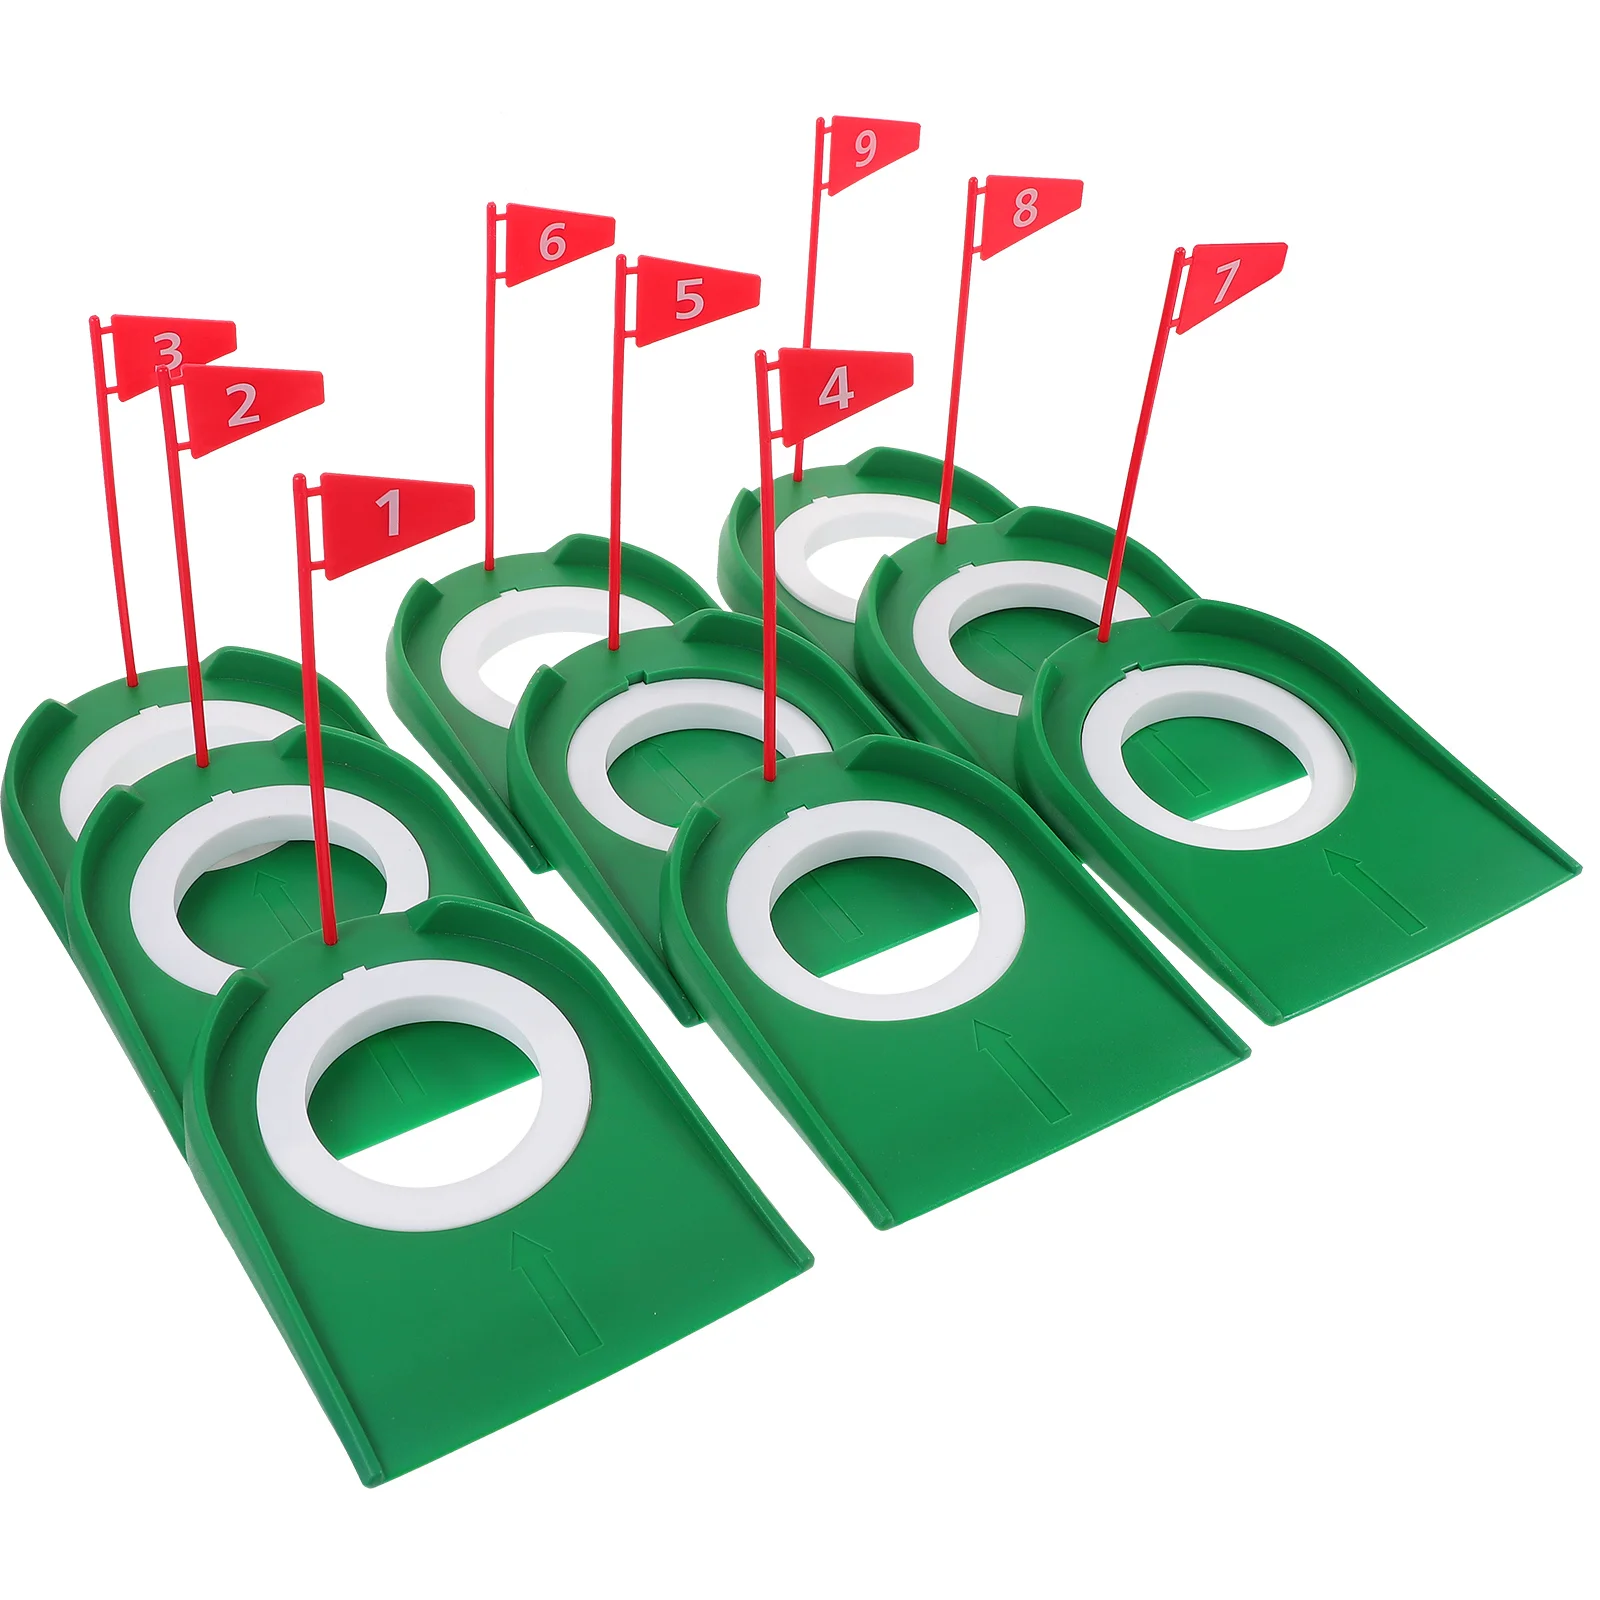 

9 Pcs Golf Balls Indoor Putting Hole Plastic Training Aids Golfs Cup Practice Regulation